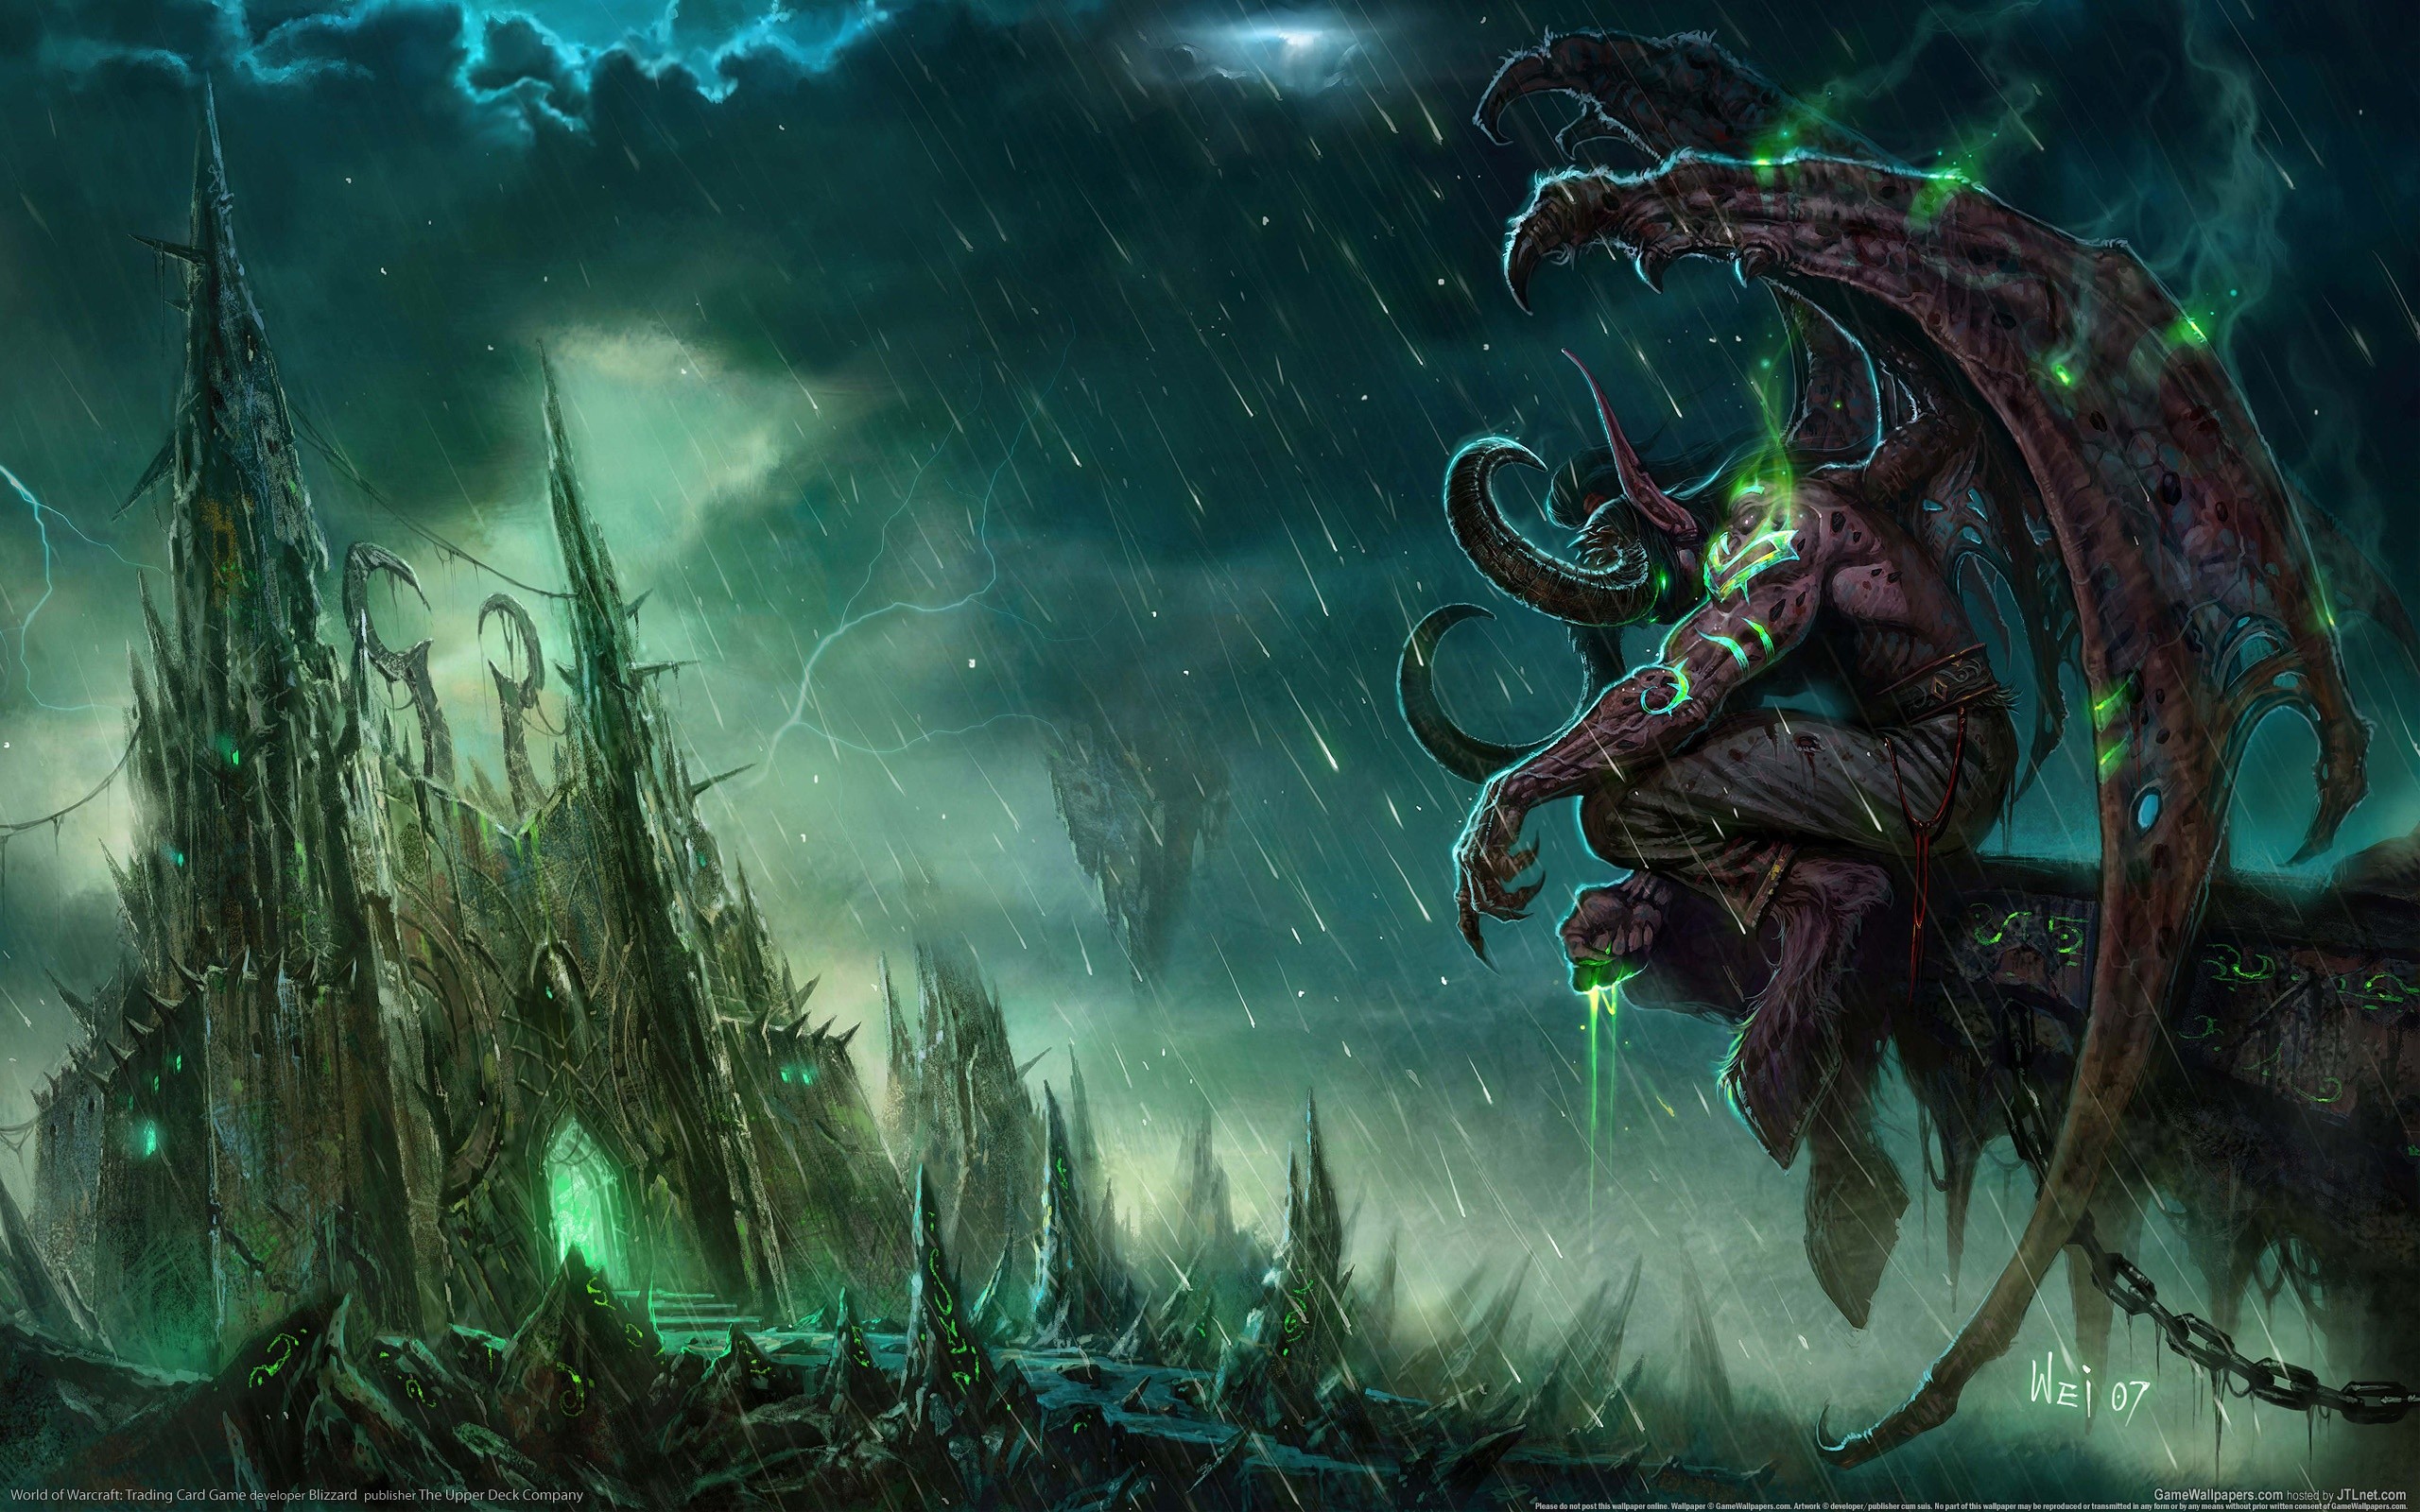 General 2560x1600 World of Warcraft: The Burning Crusade Illidan Stormrage Black Temple fantasy art World of Warcraft video games PC gaming video game art rain horns storm